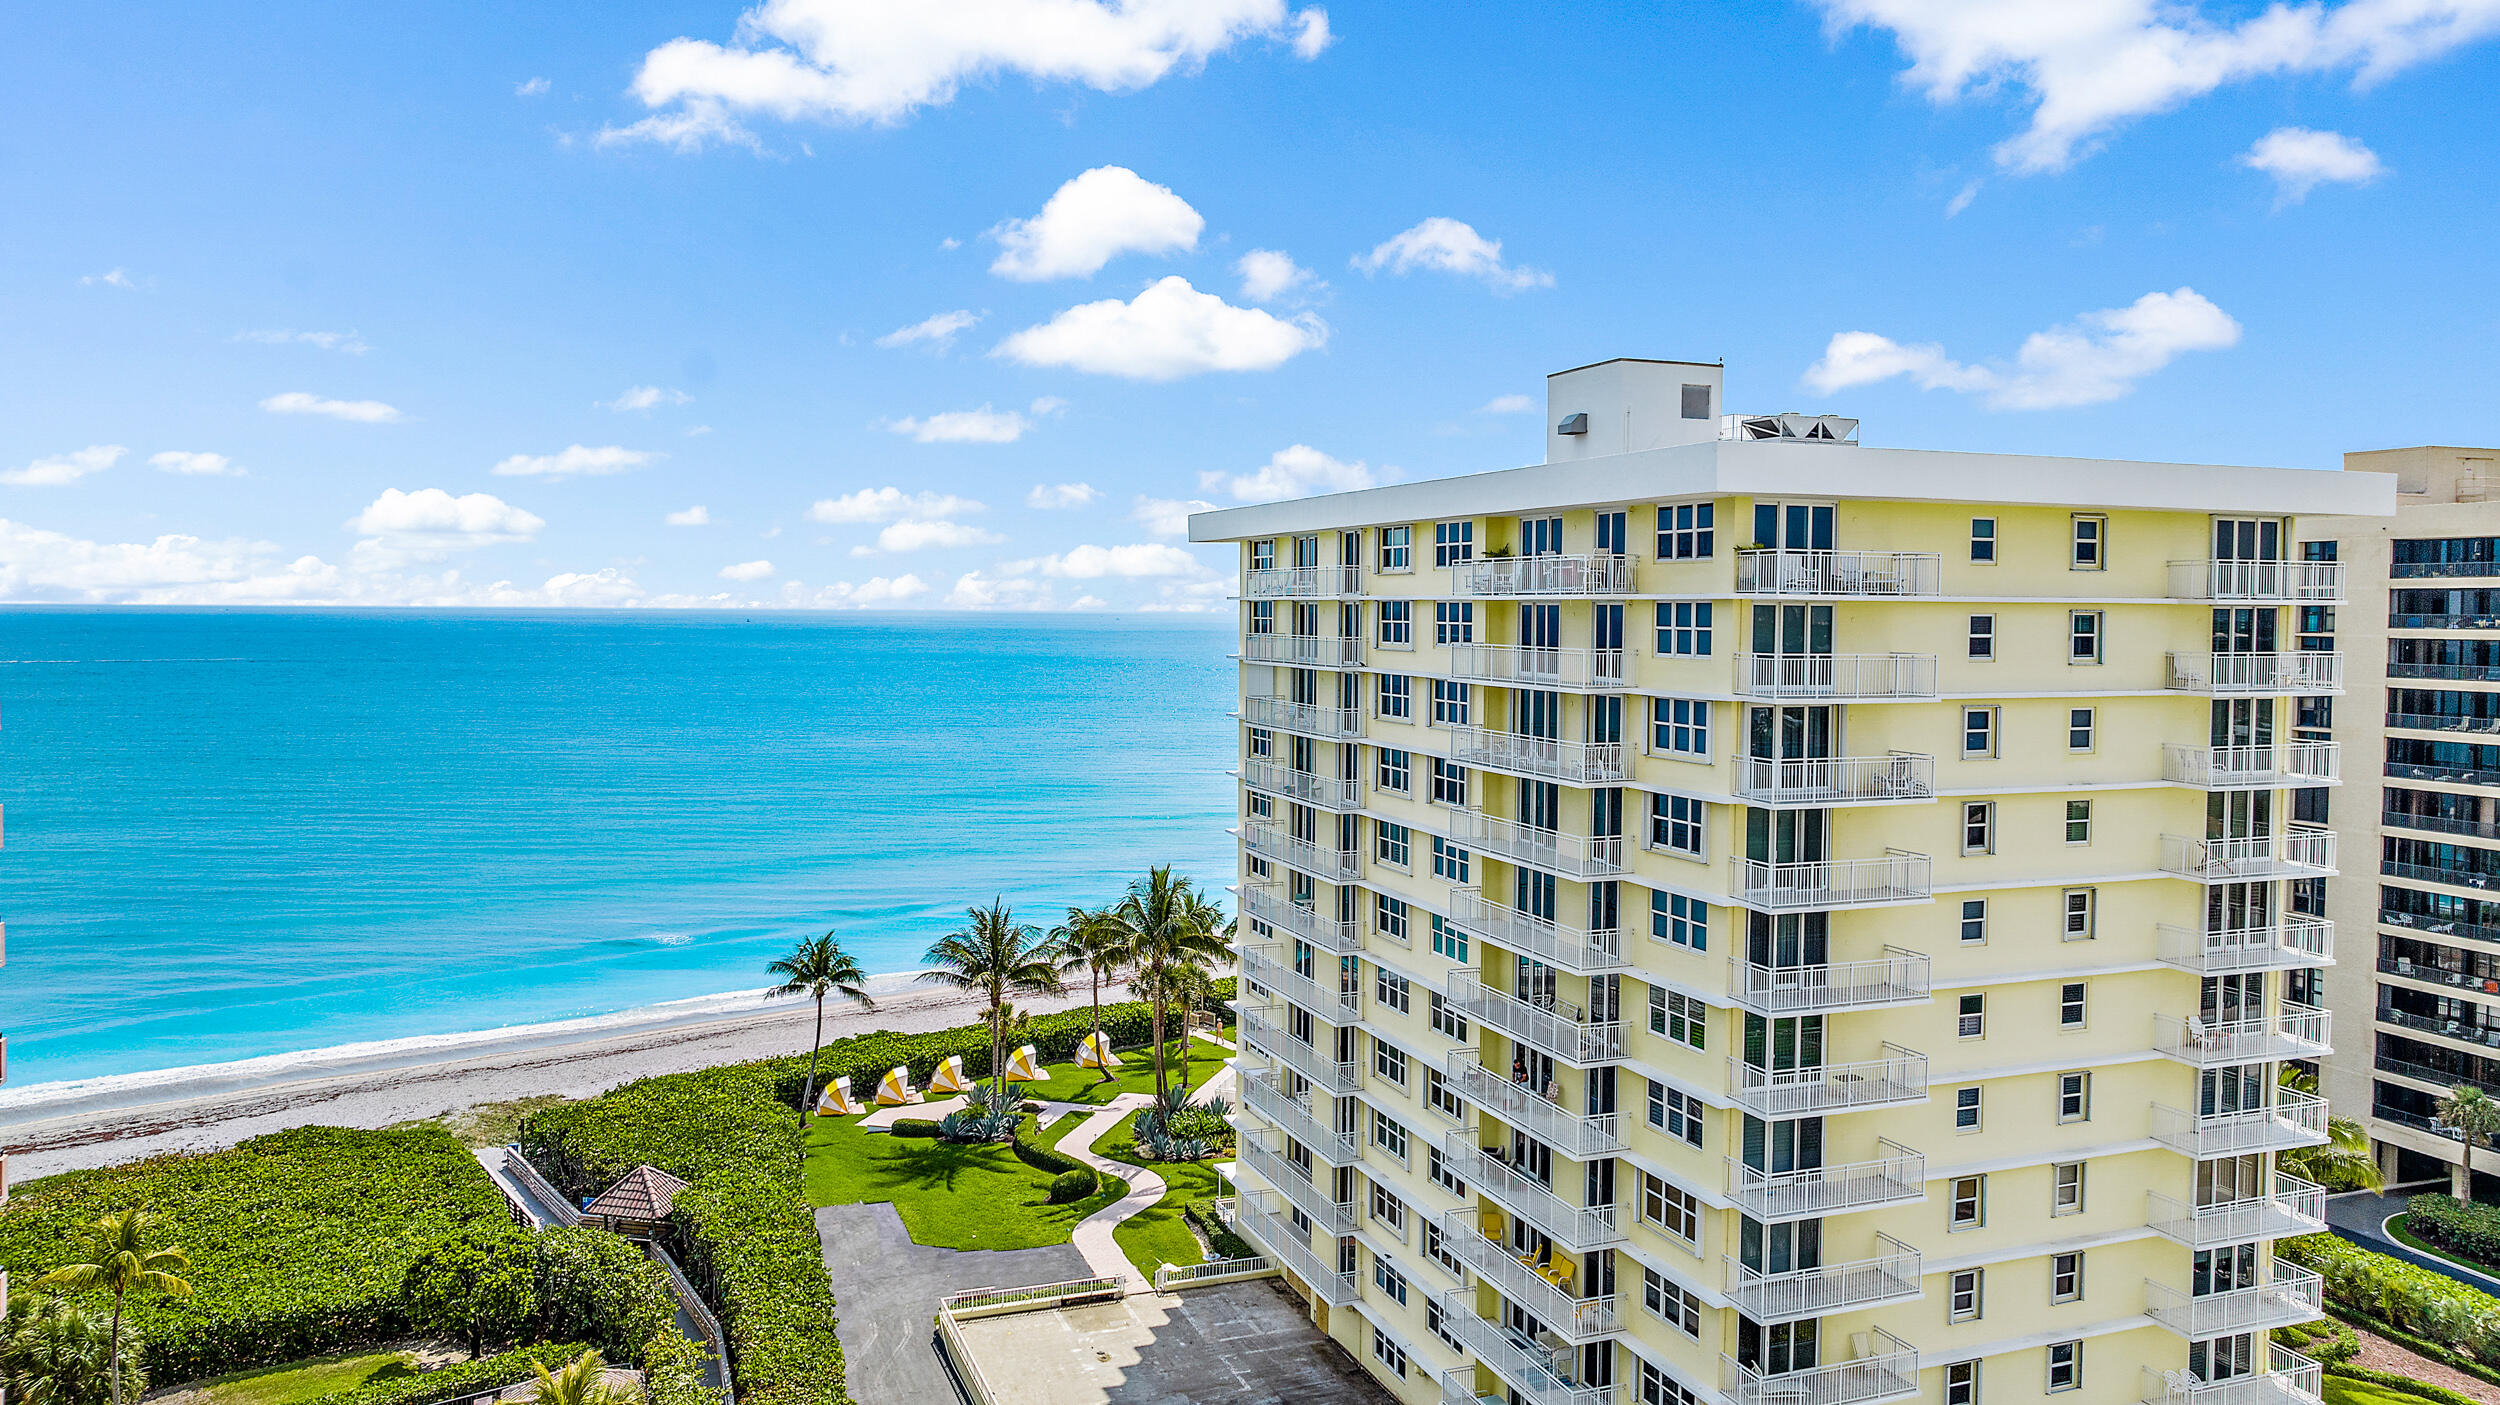 Property for Sale at 500 Ocean Drive E-12A, Juno Beach, Palm Beach County, Florida - Bedrooms: 2 
Bathrooms: 2  - $1,450,000